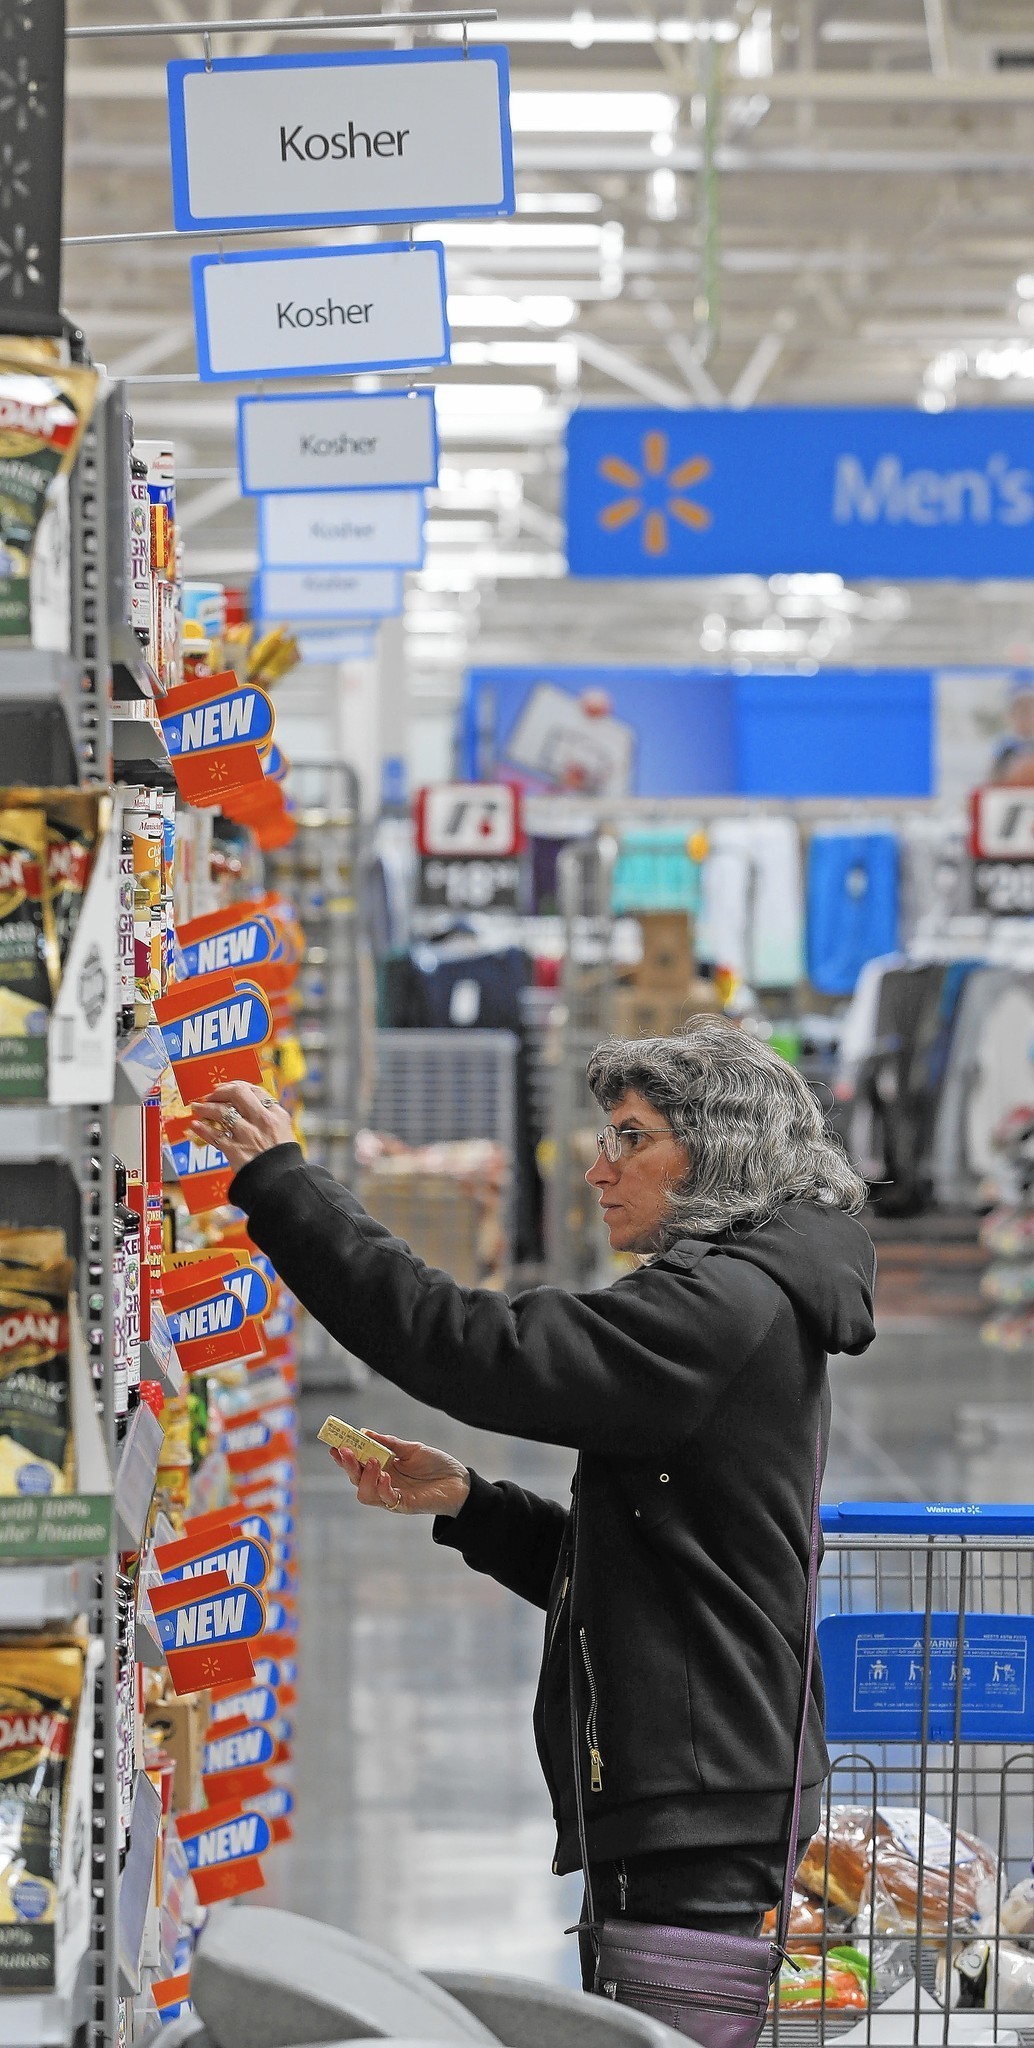 Skokie Wal-Mart banking big on kosher items - Chicago Tribune